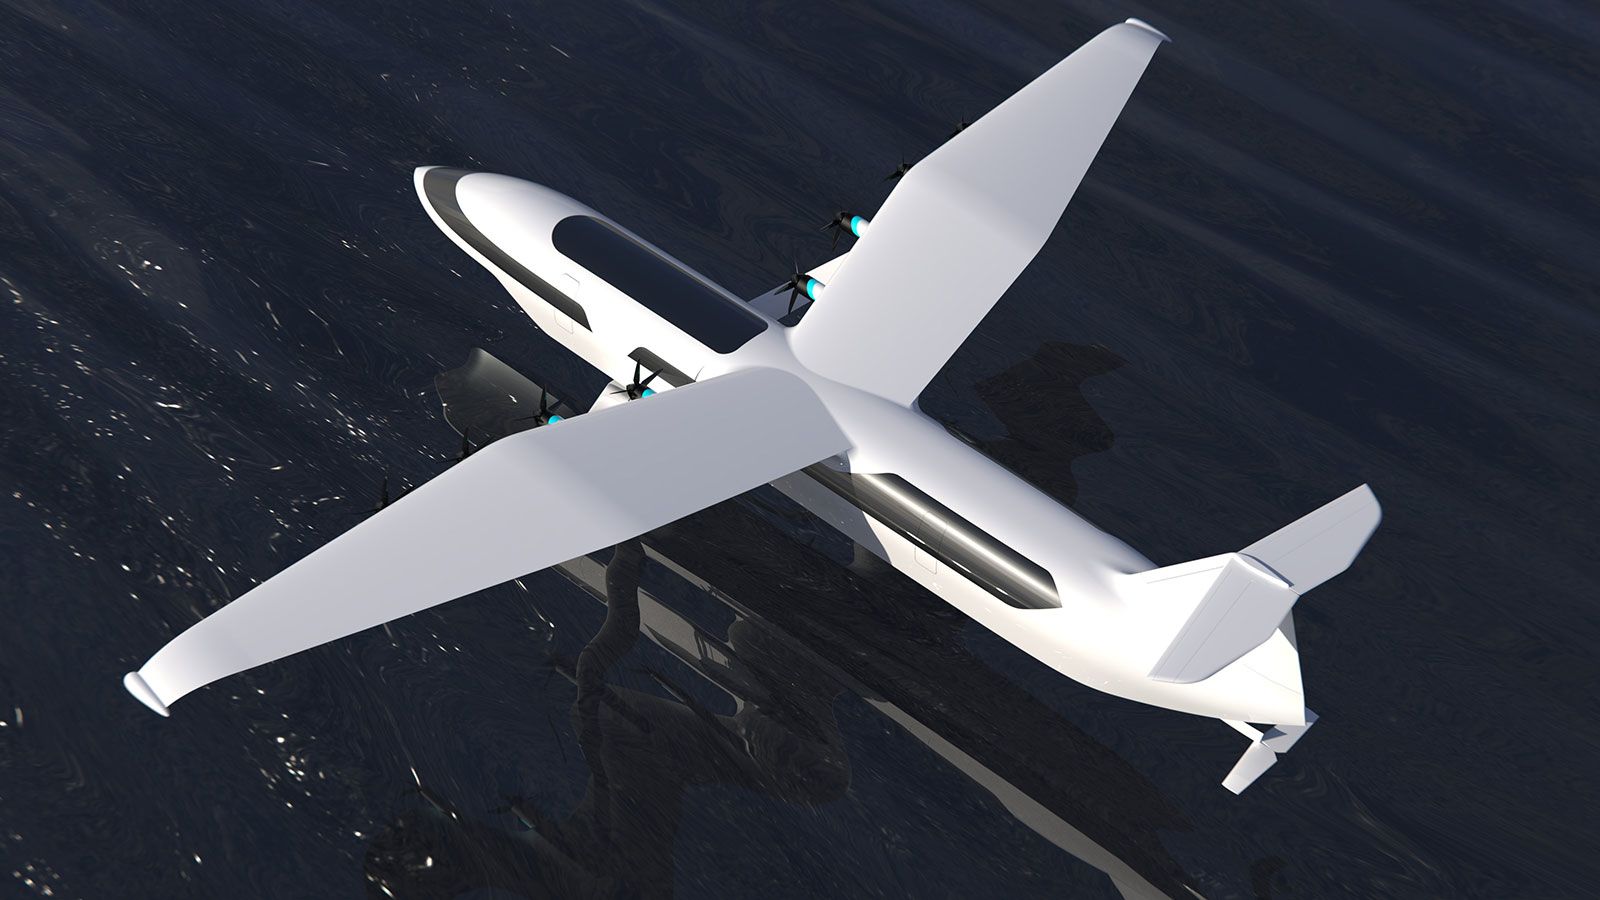 This boat-plane hybrid could transform inter-city travel | CNN